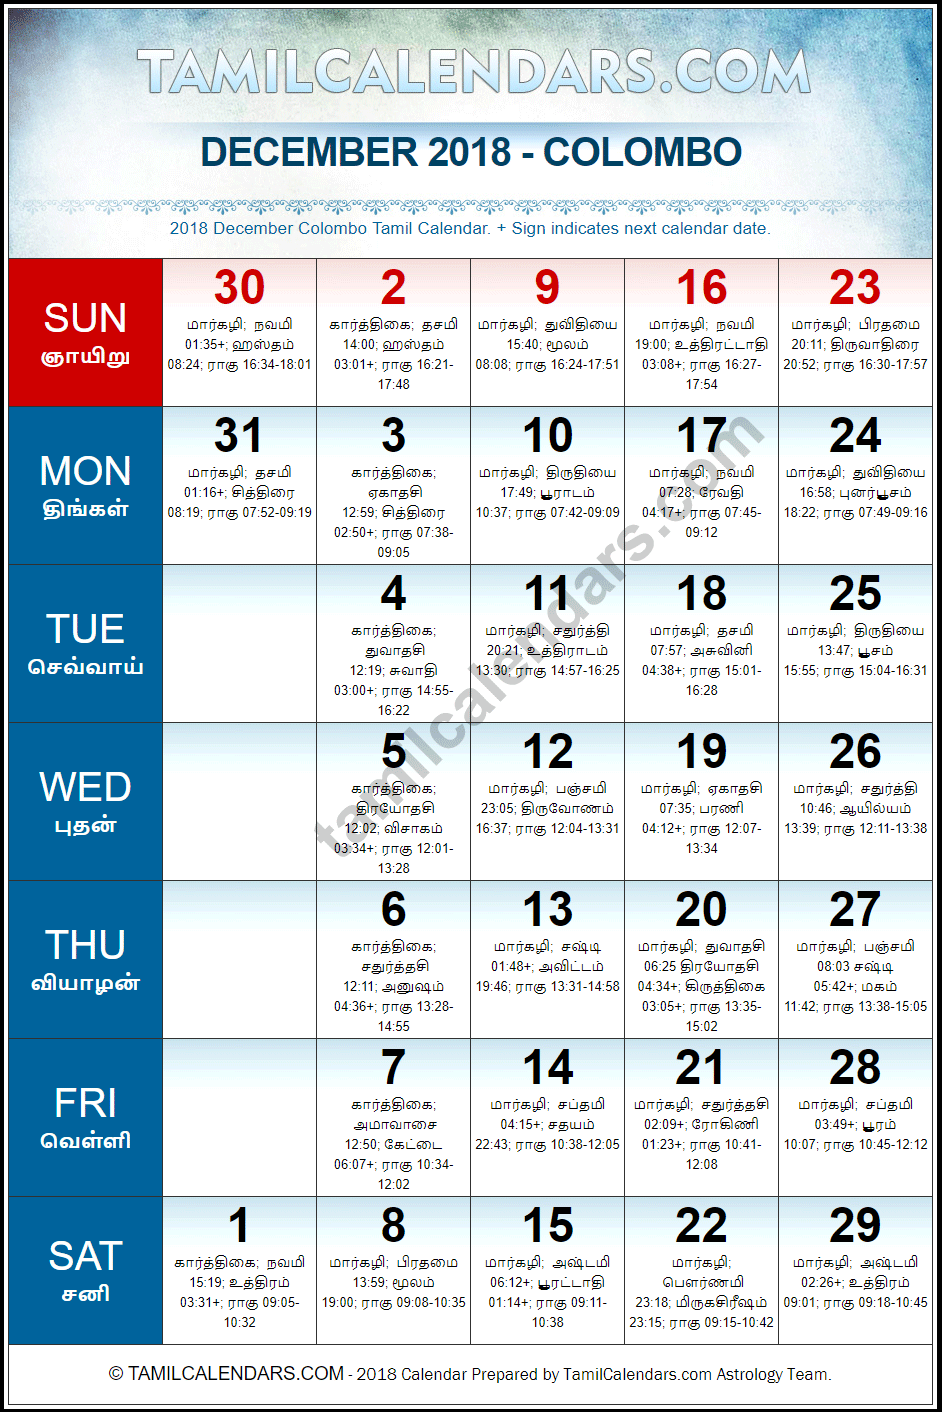 December 2018 Tamil Calendar for Sri Lanka (Colombo)